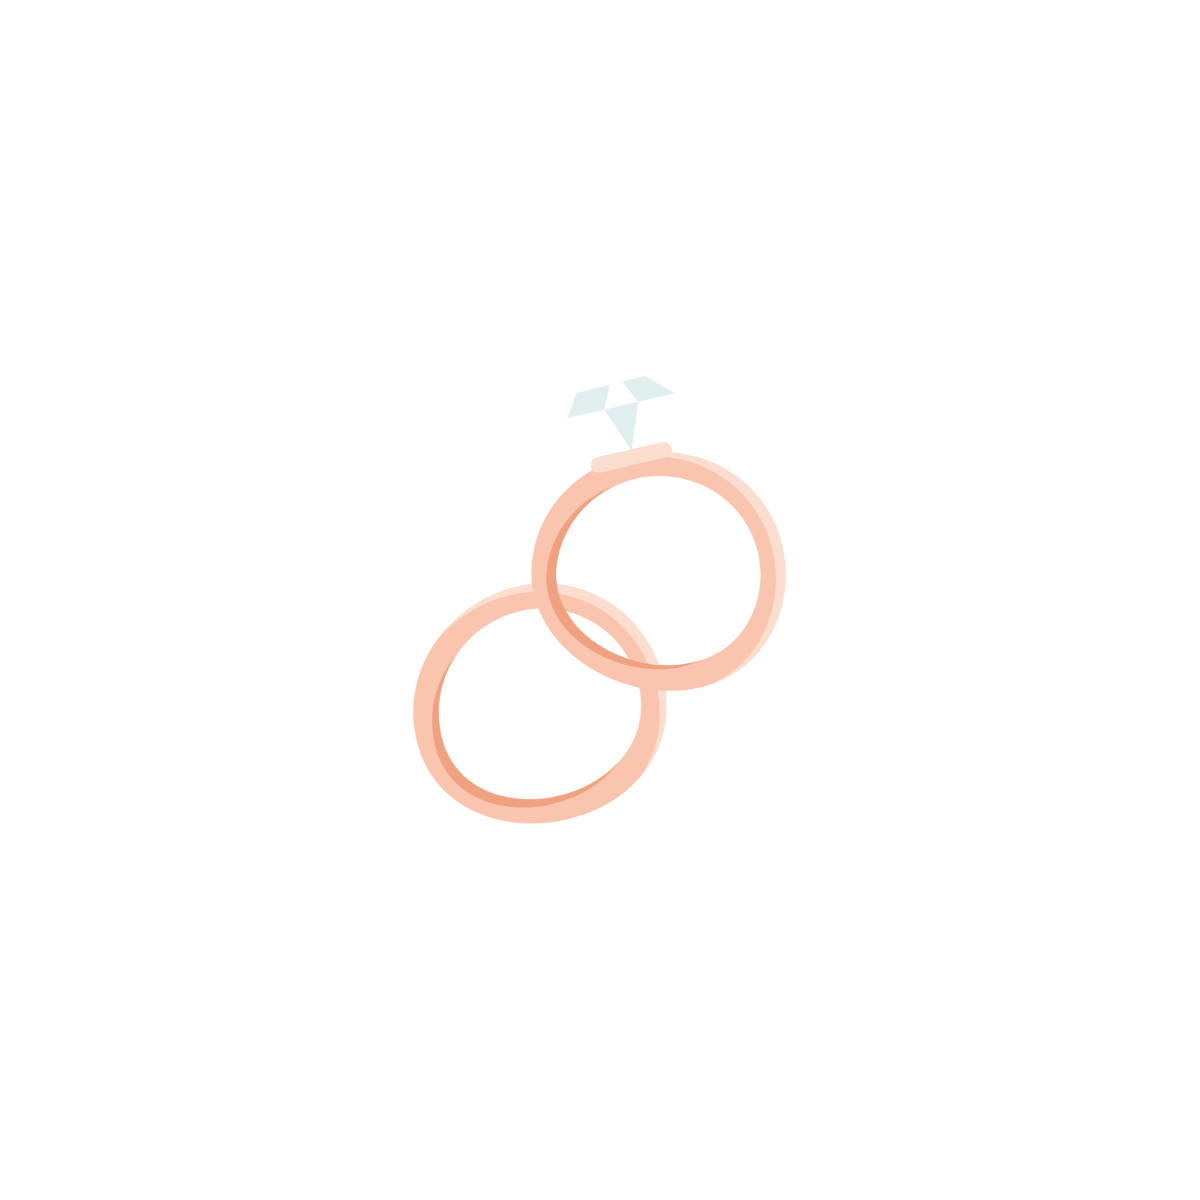 Wedding Ring Illustration Template